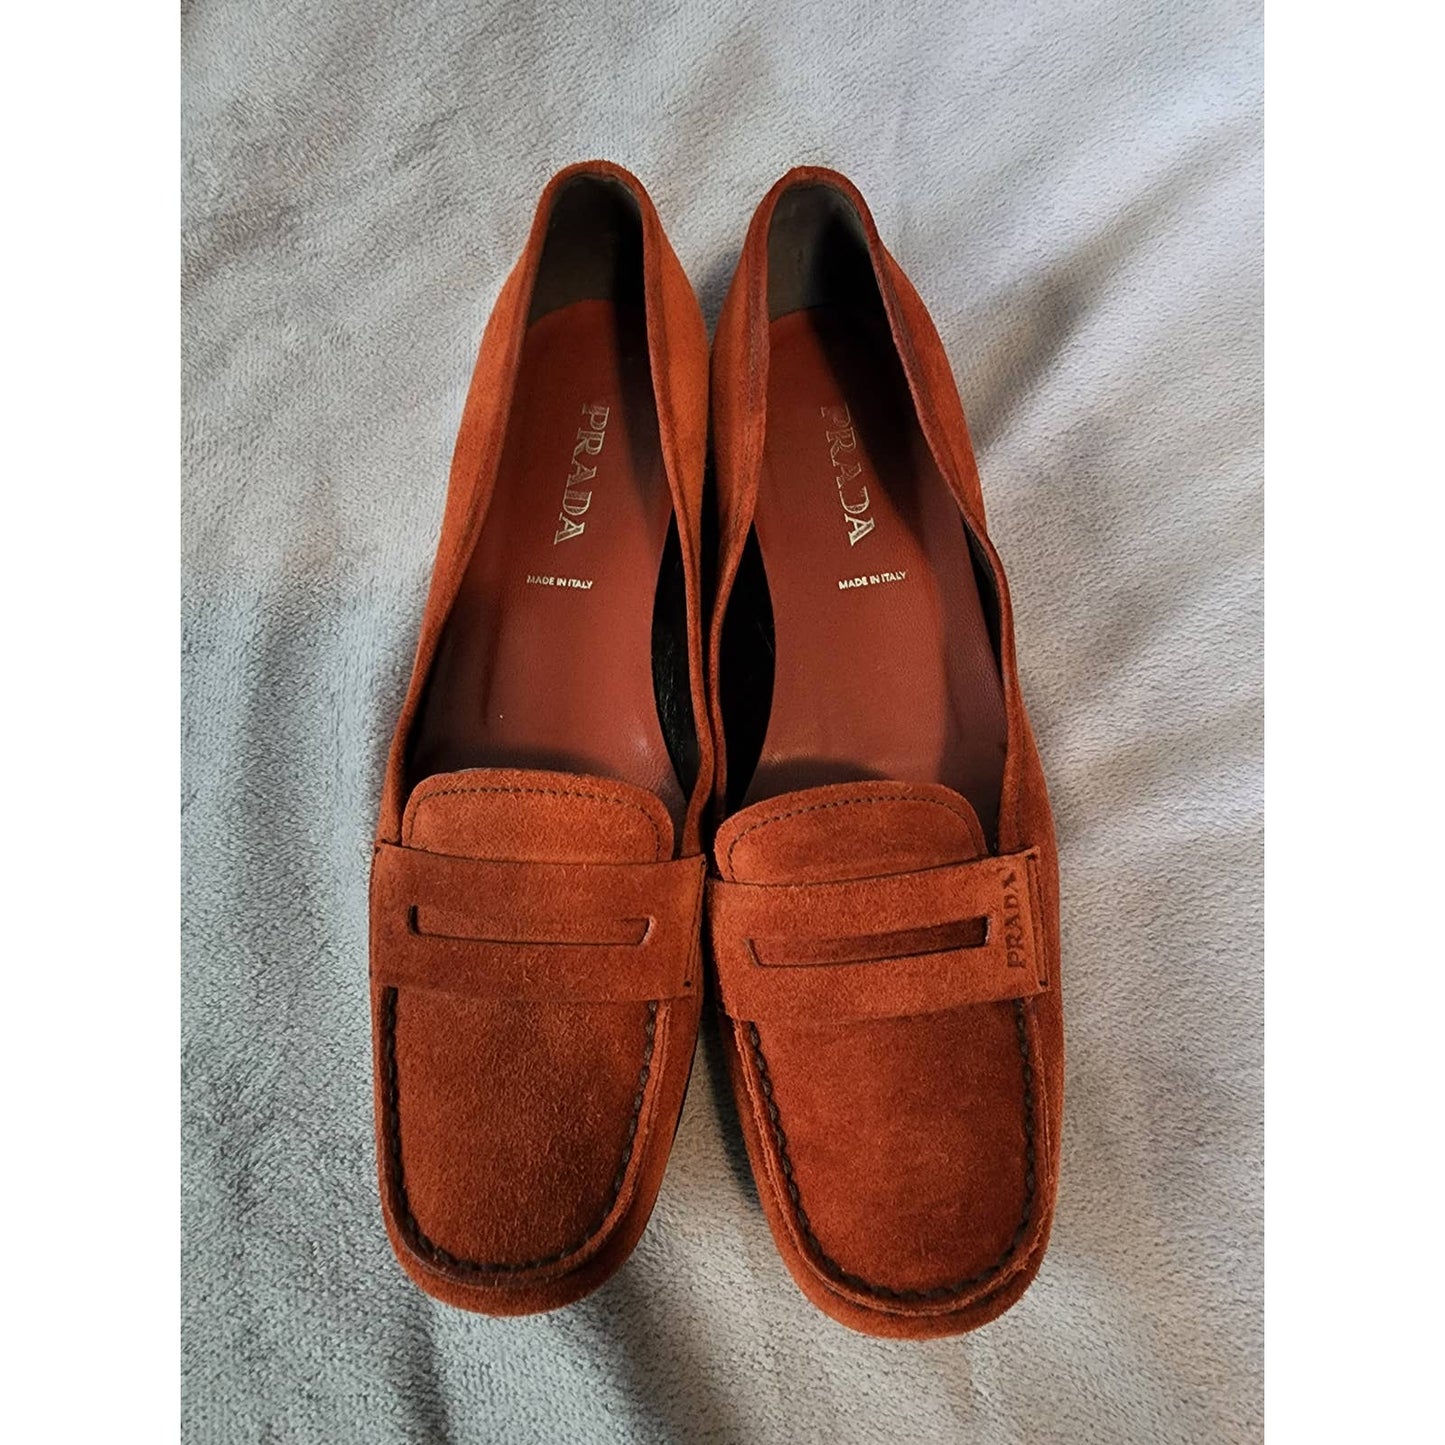 Prada Orange Suede Loafers